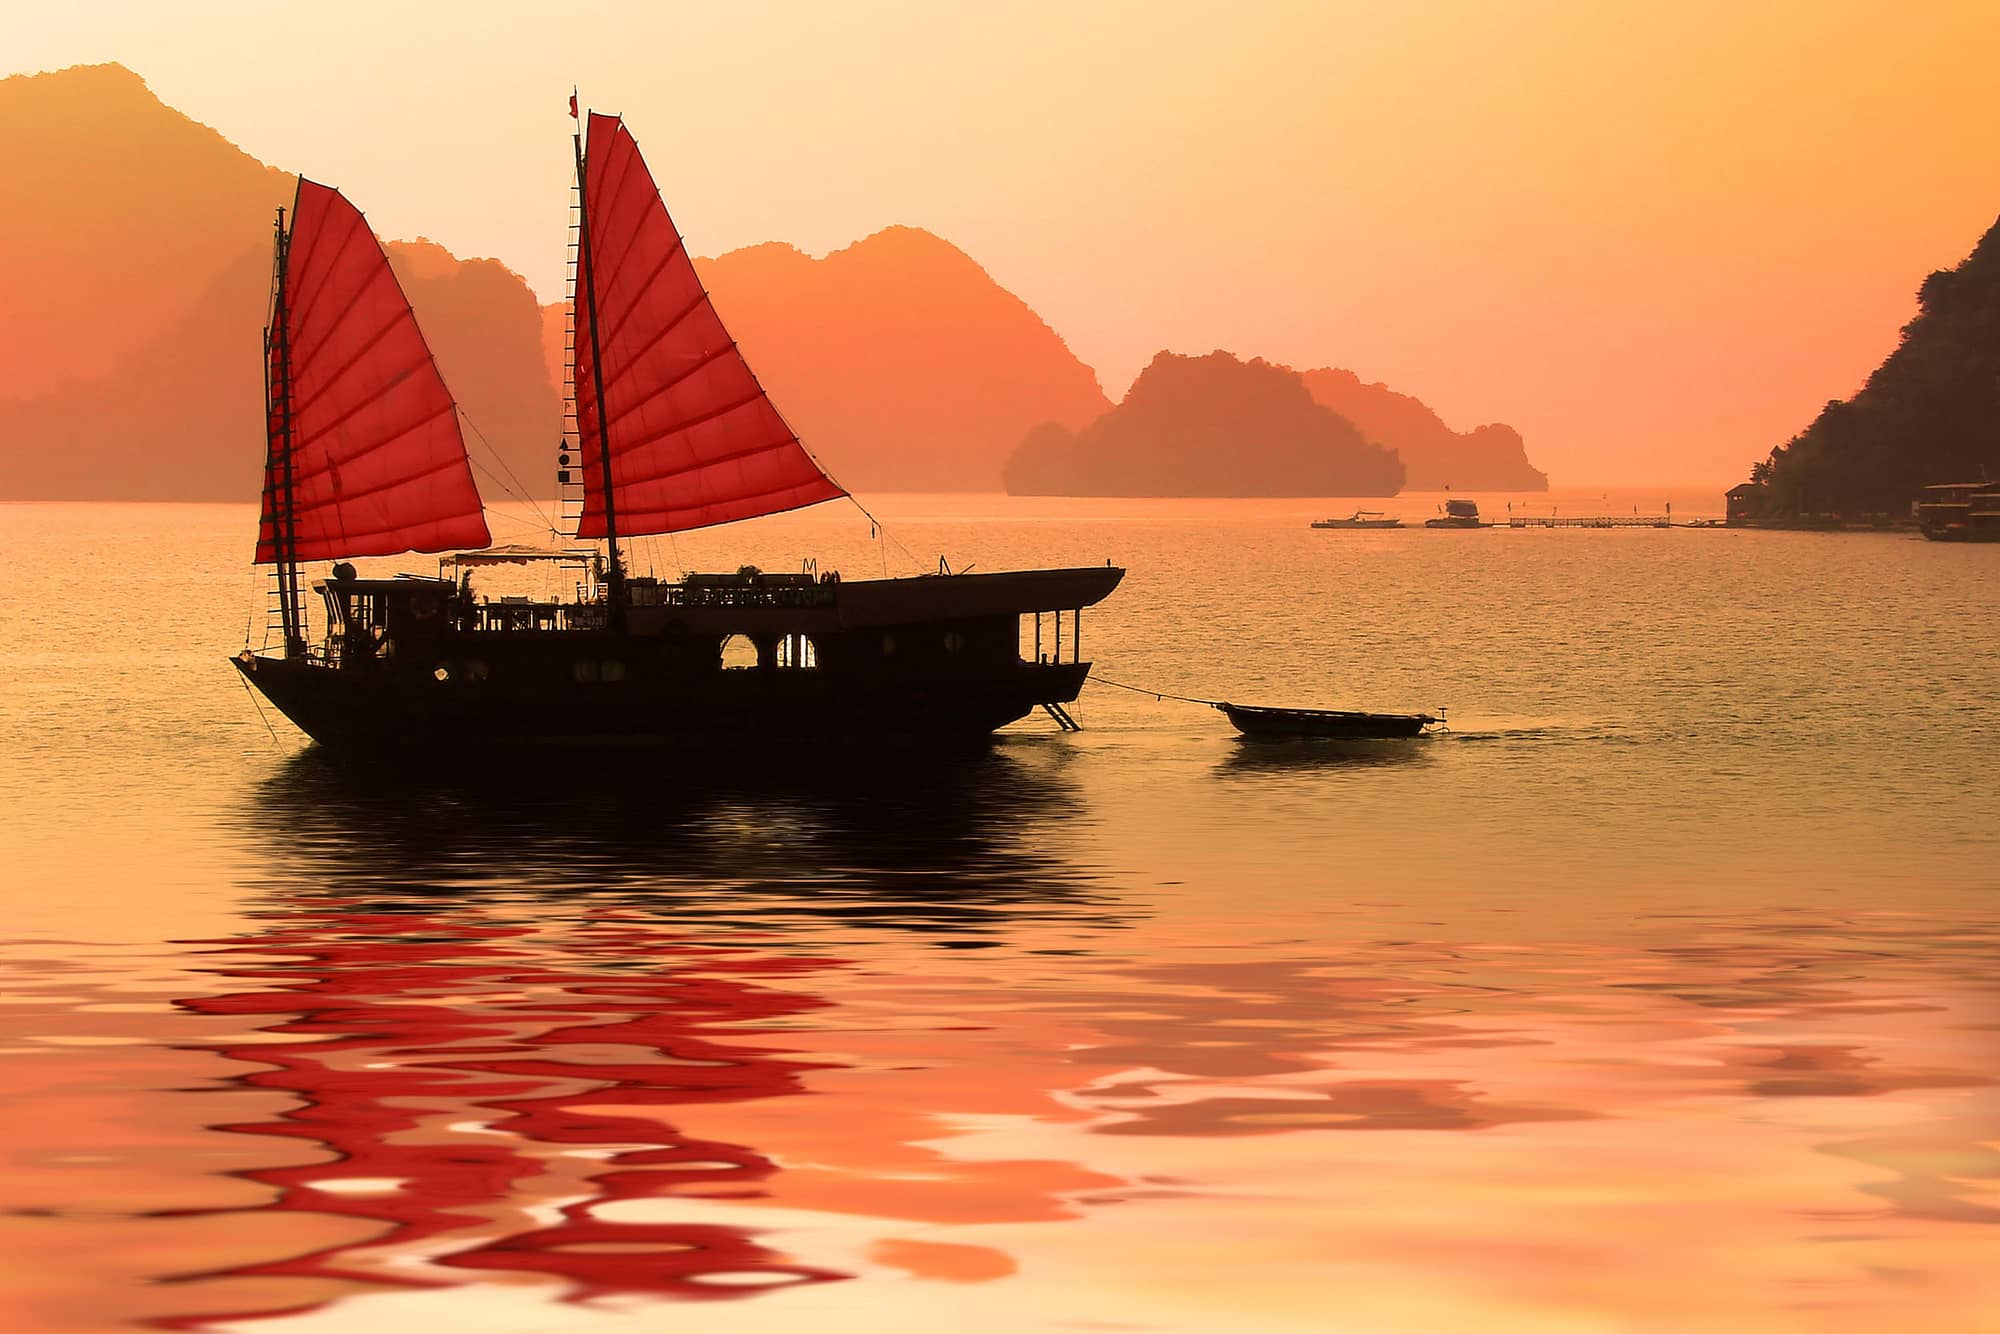 Junk boat at sunset in Halong Bay, Vietnam